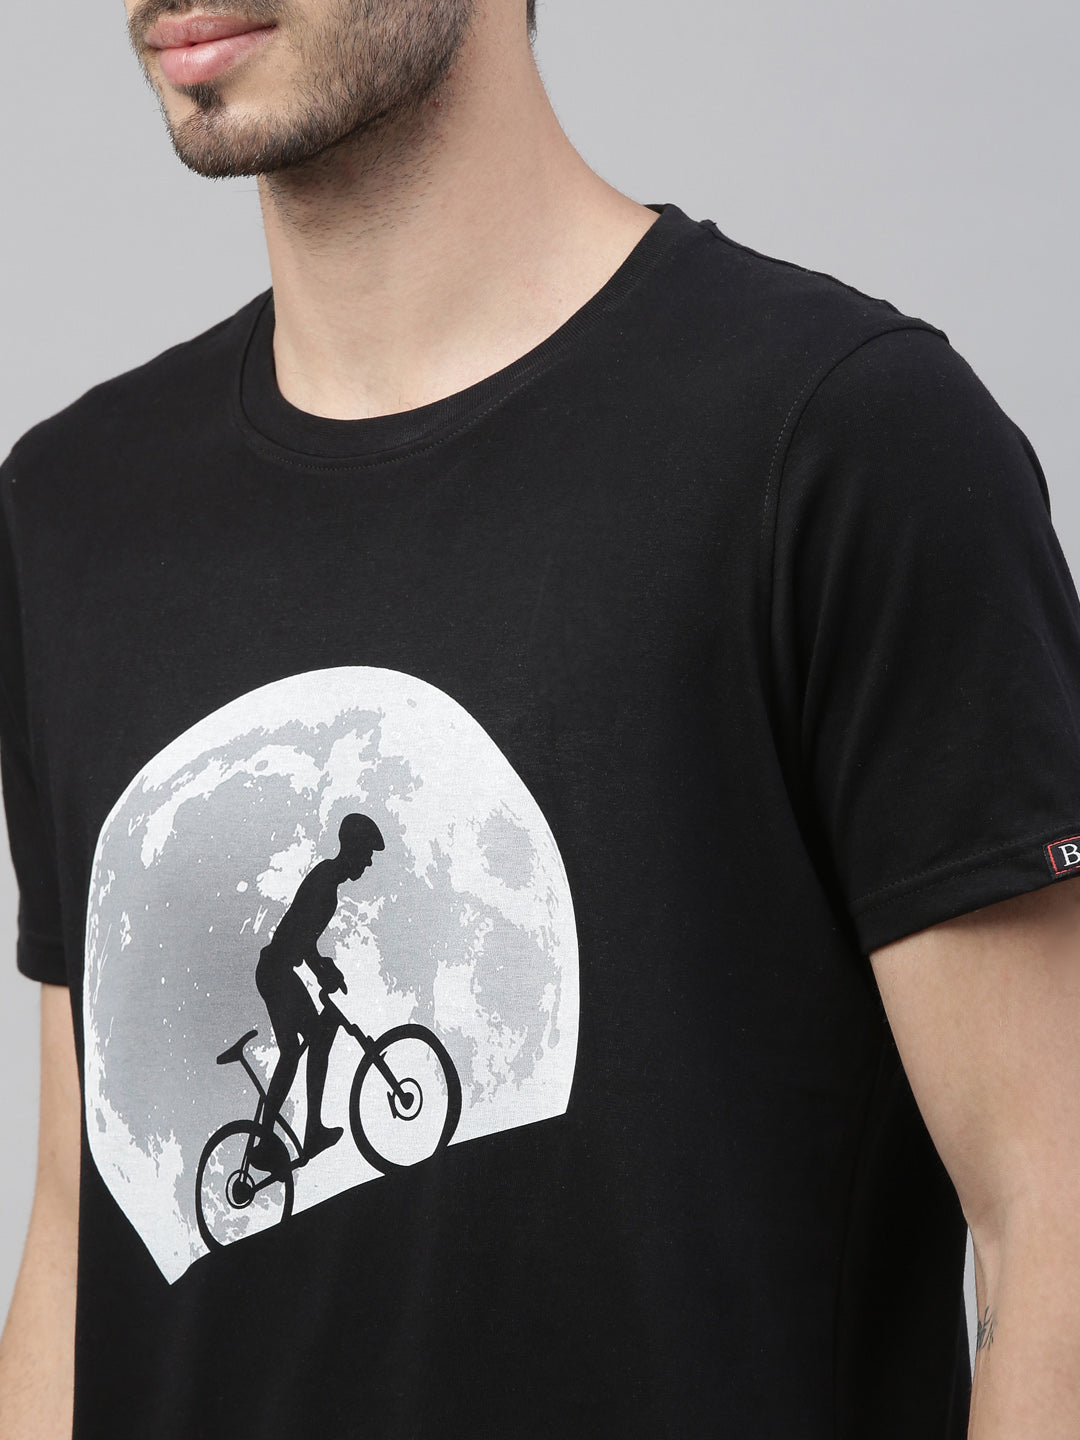 Cycling Through The Moon T-Shirt Graphic T-Shirts Bushirt   